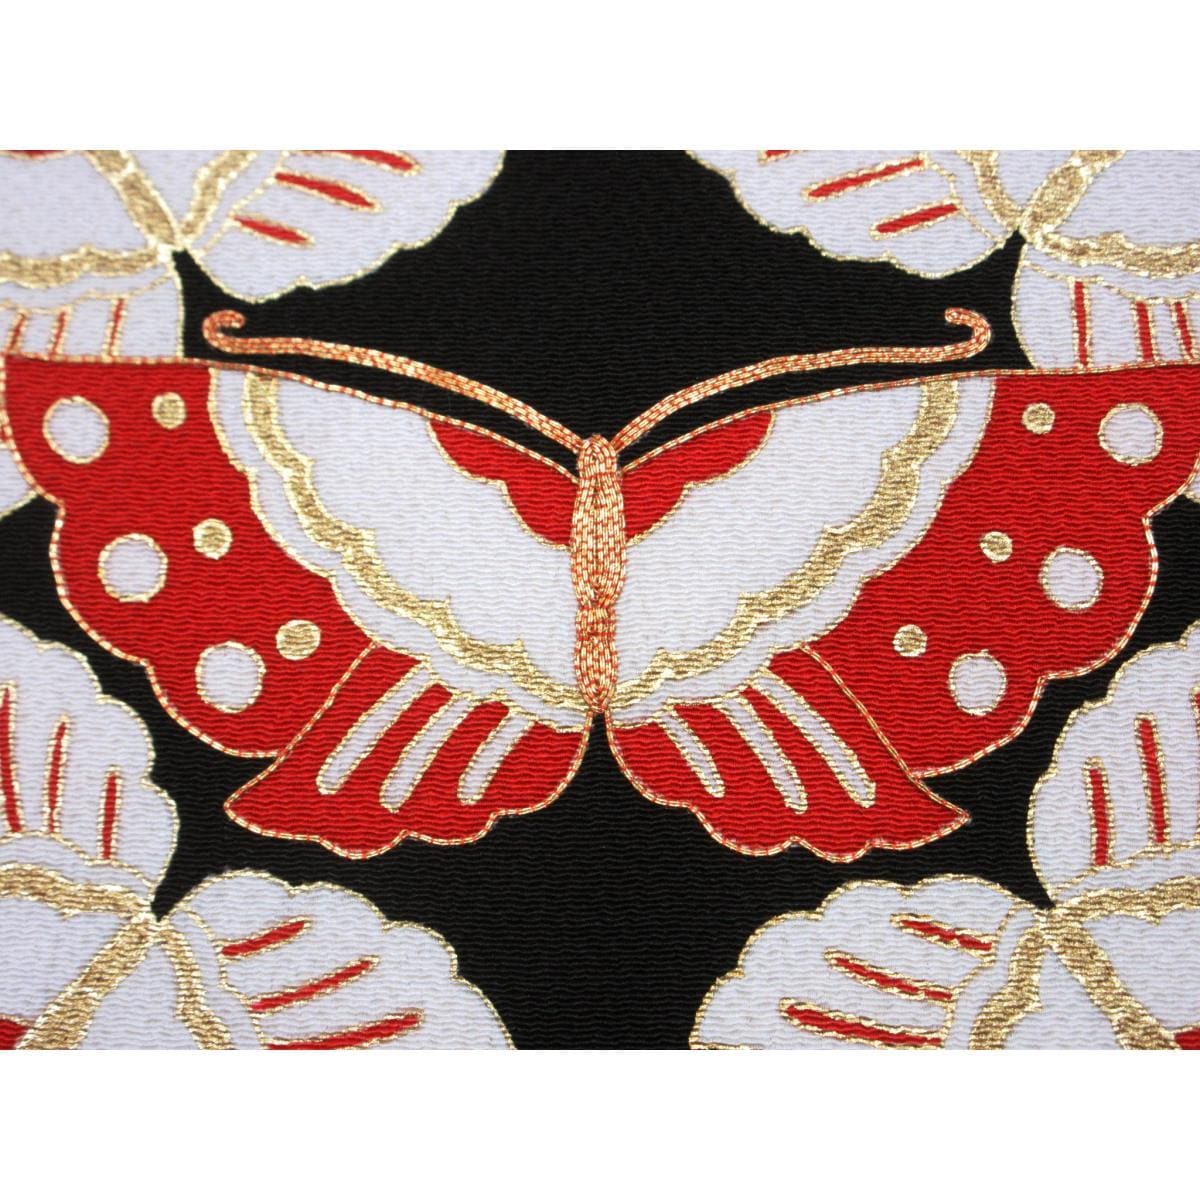 Nagoya obi crepe dyed obi Yuzen gold color processing embroidery